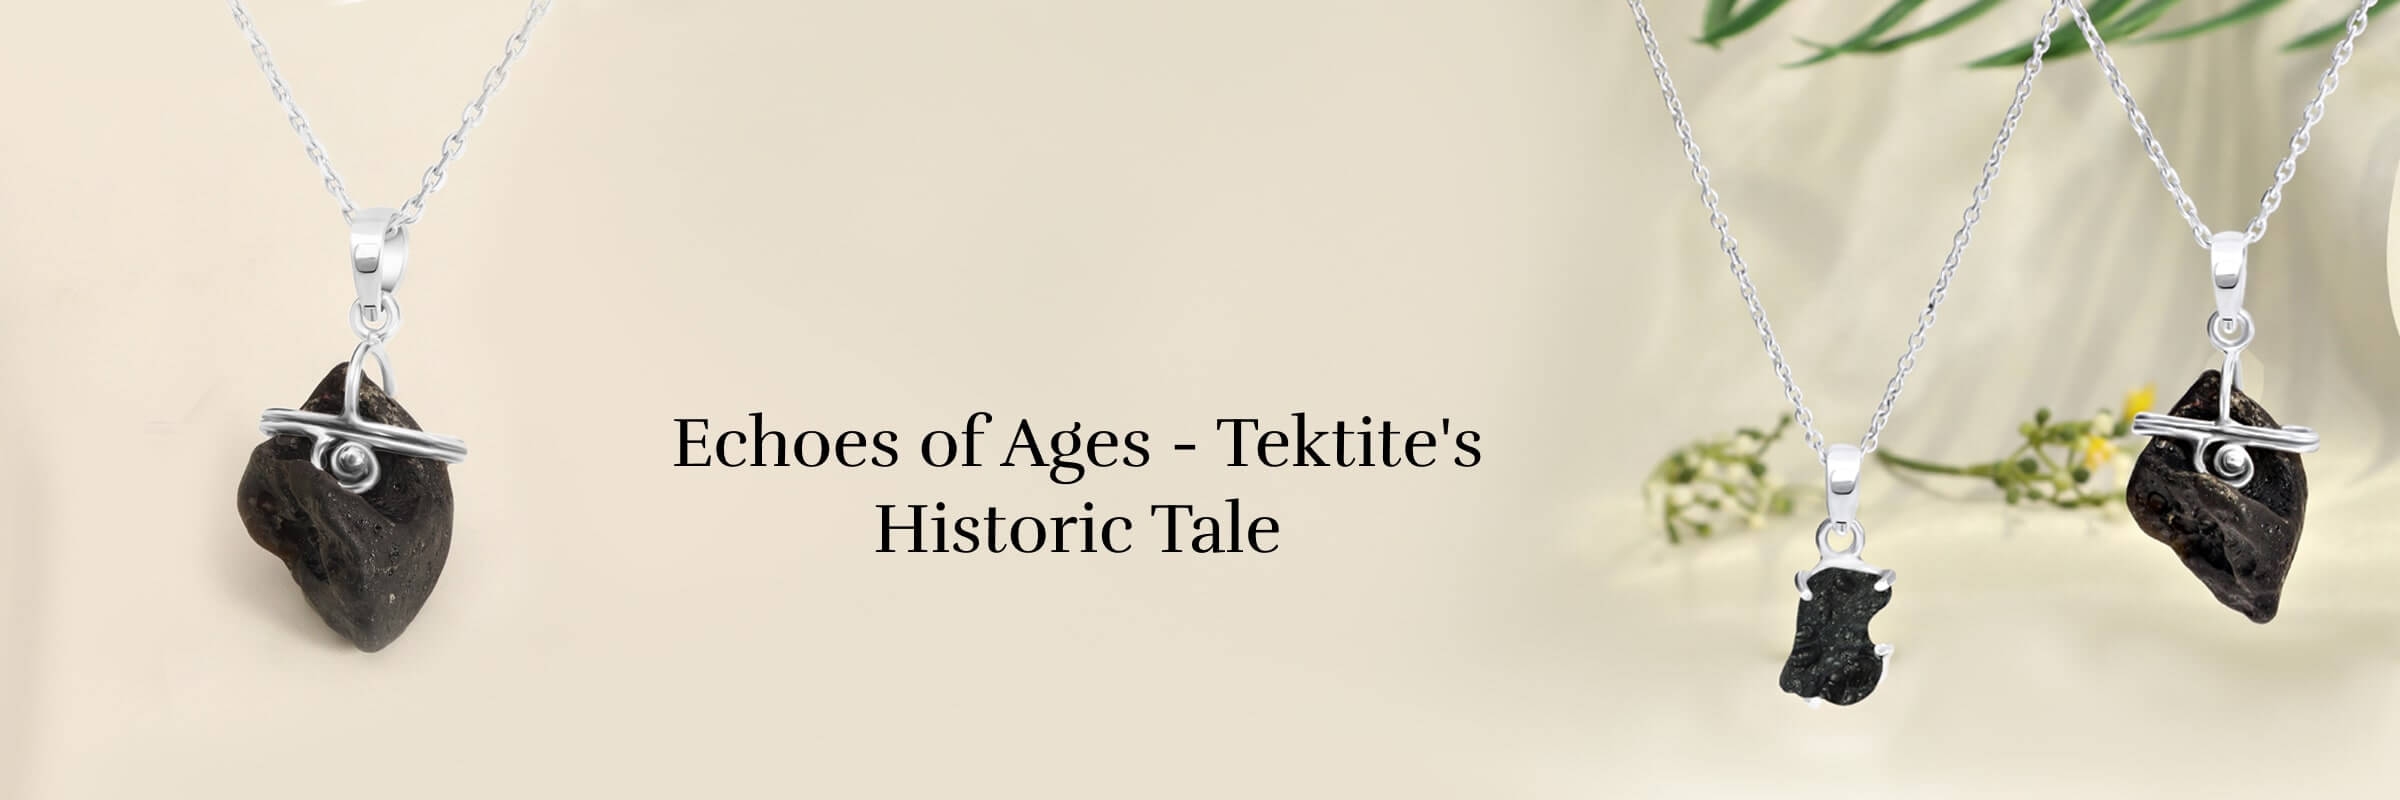 History Of Tektite